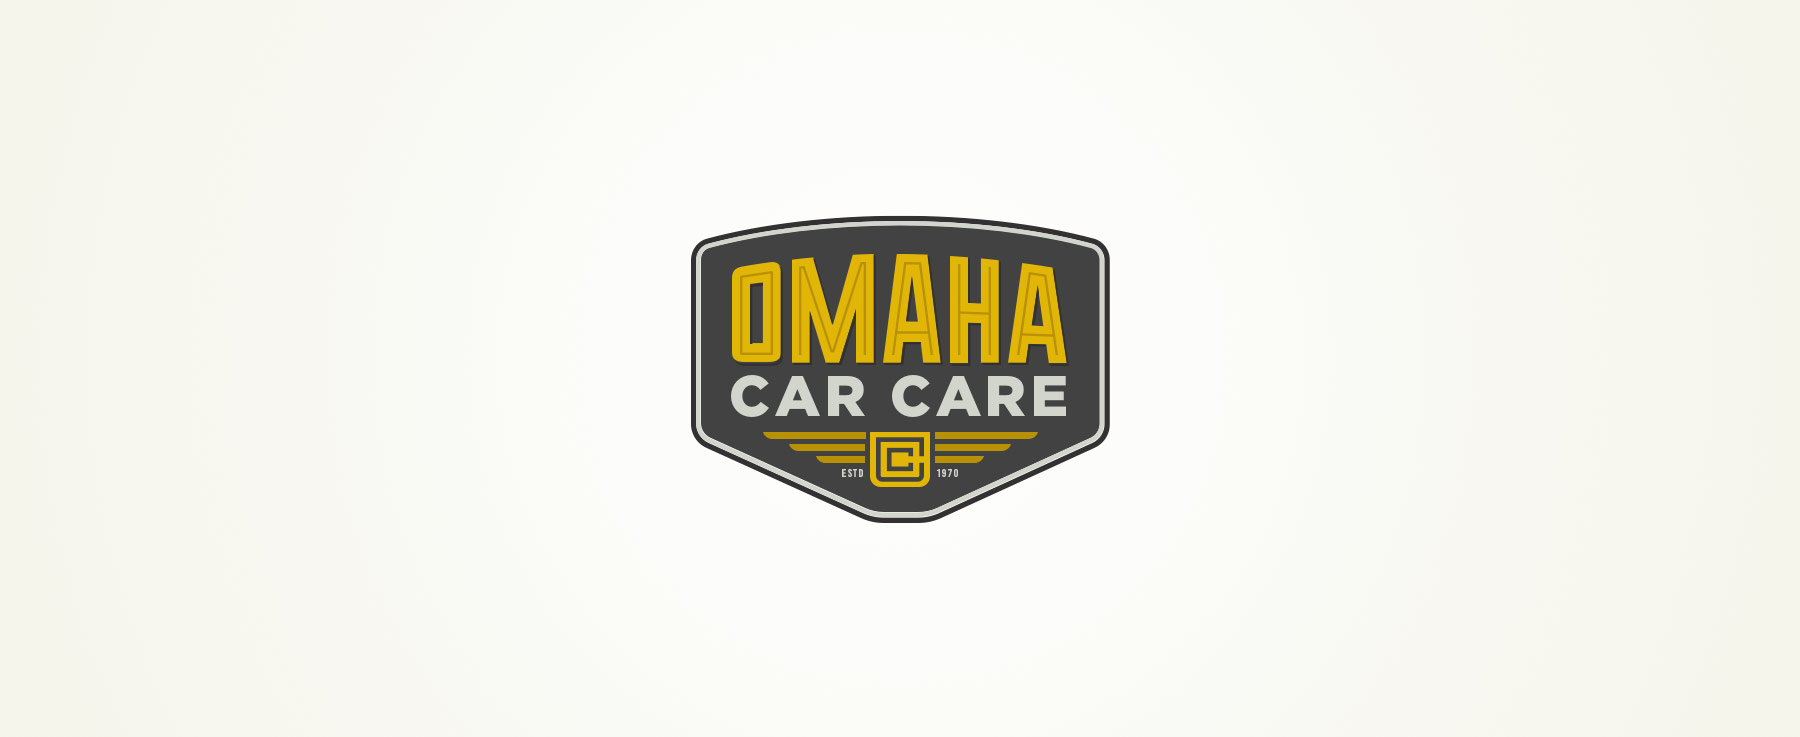 Omaha Car Care - New Logo